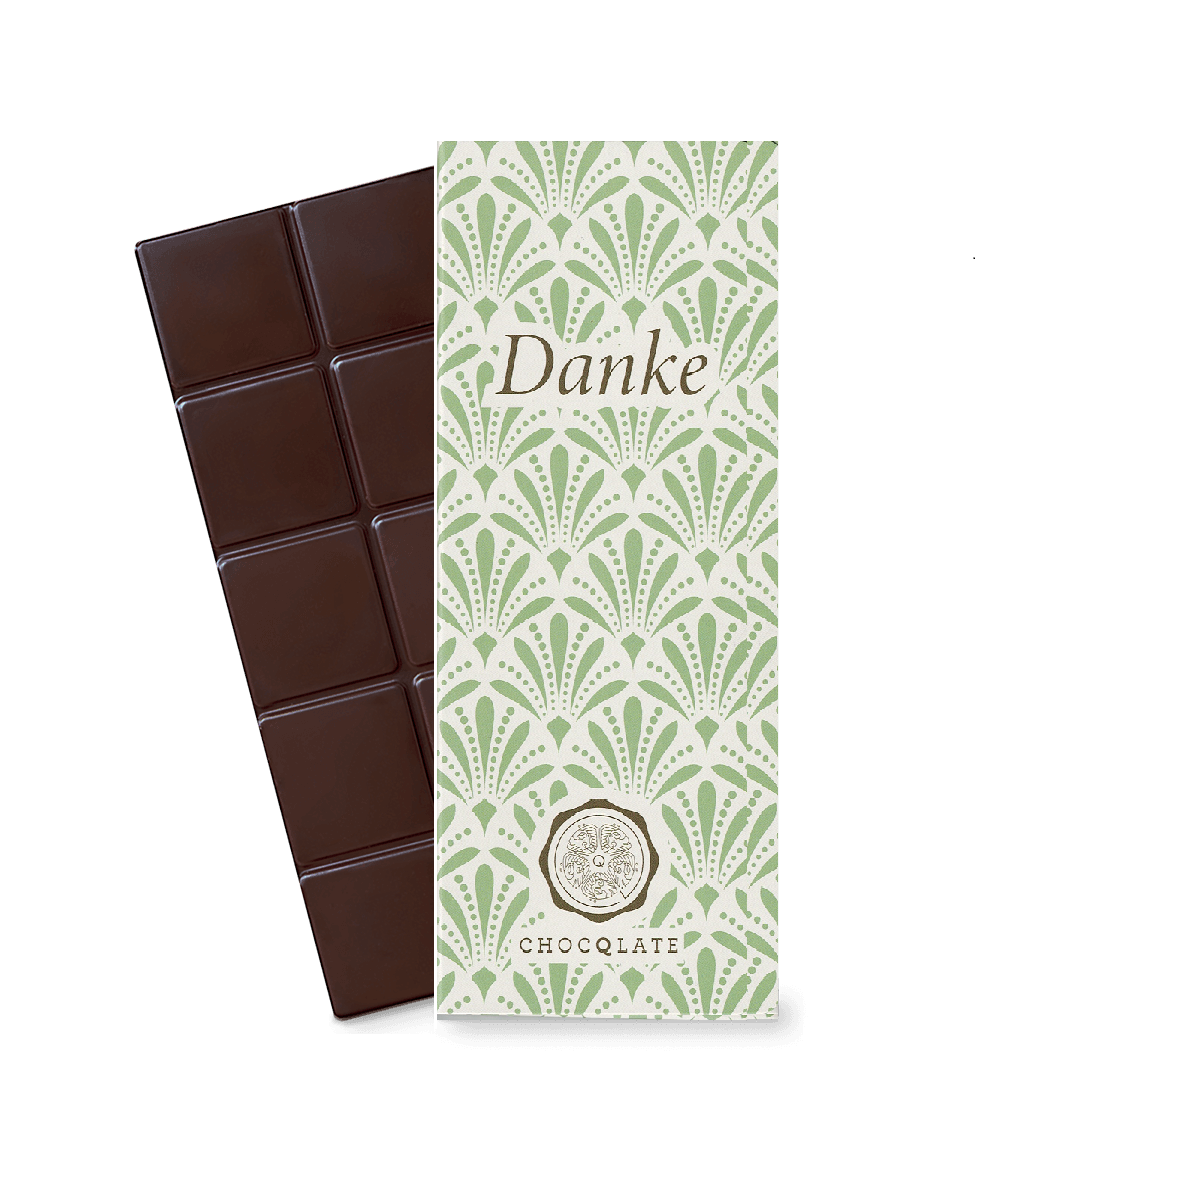 "Danke" CHOCQLATE Bio Schokolade 50% Kakao